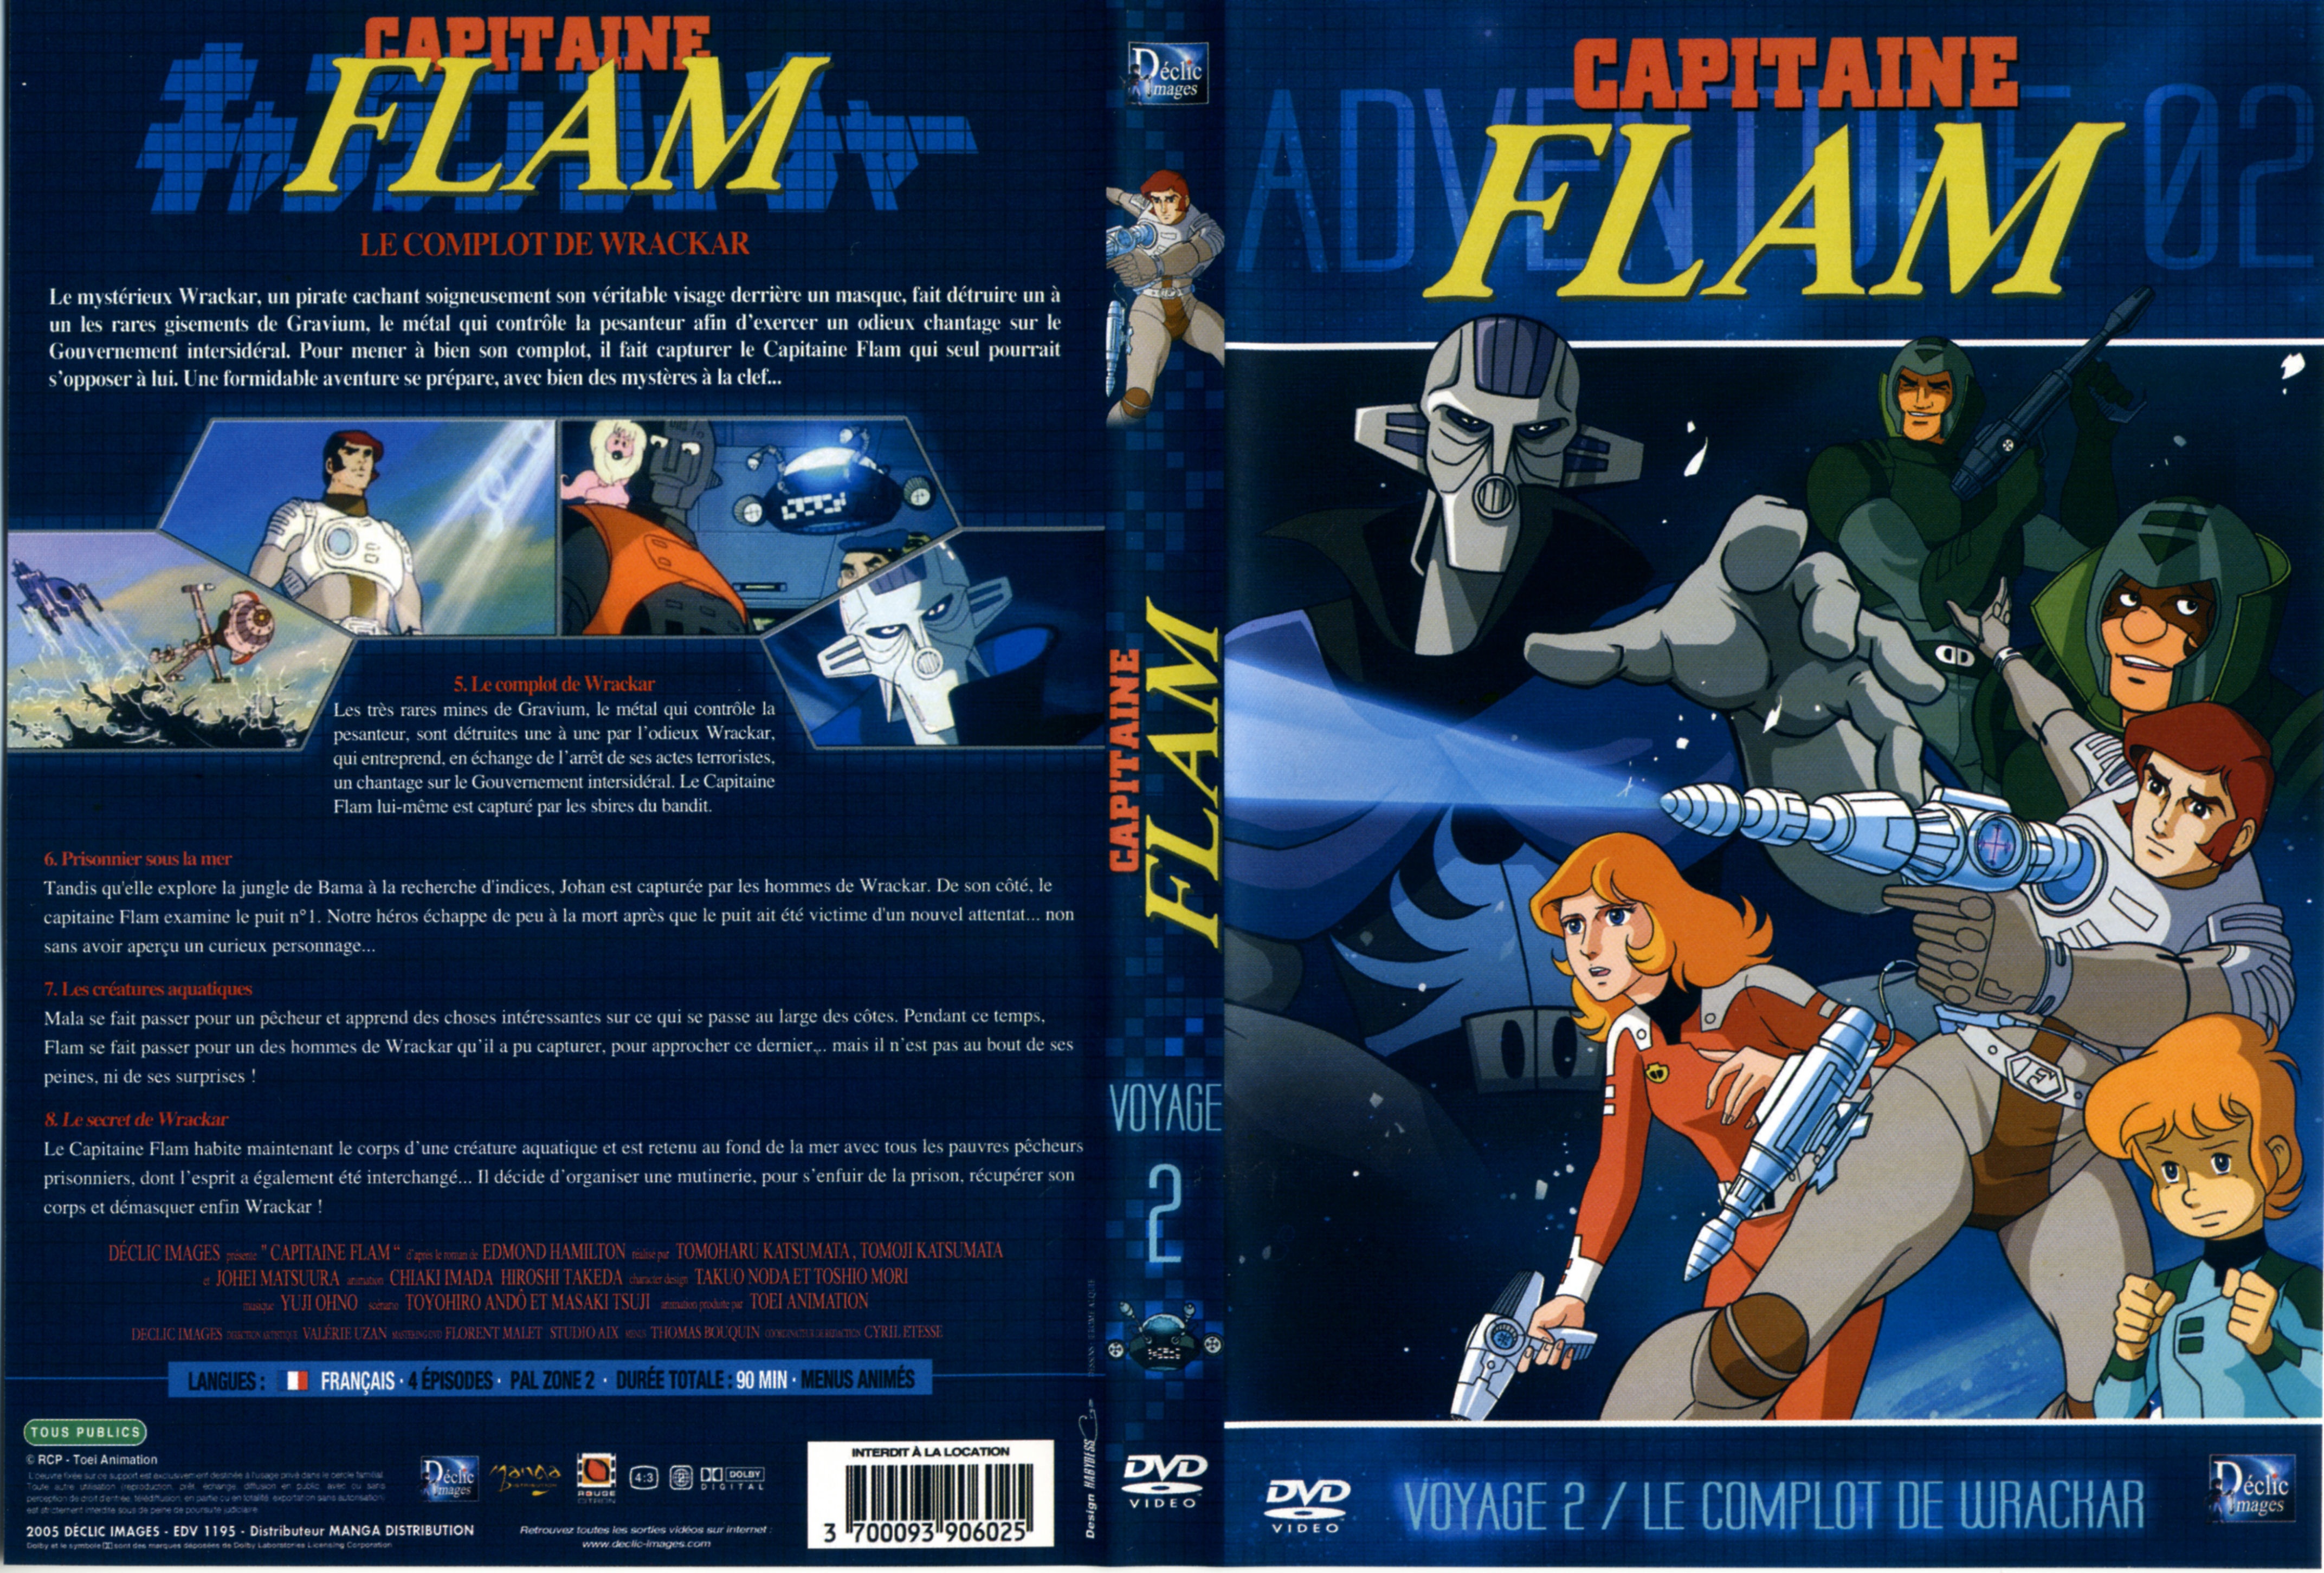 Jaquette DVD Capitaine Flam vol 2 (DECLIC IMAGES)